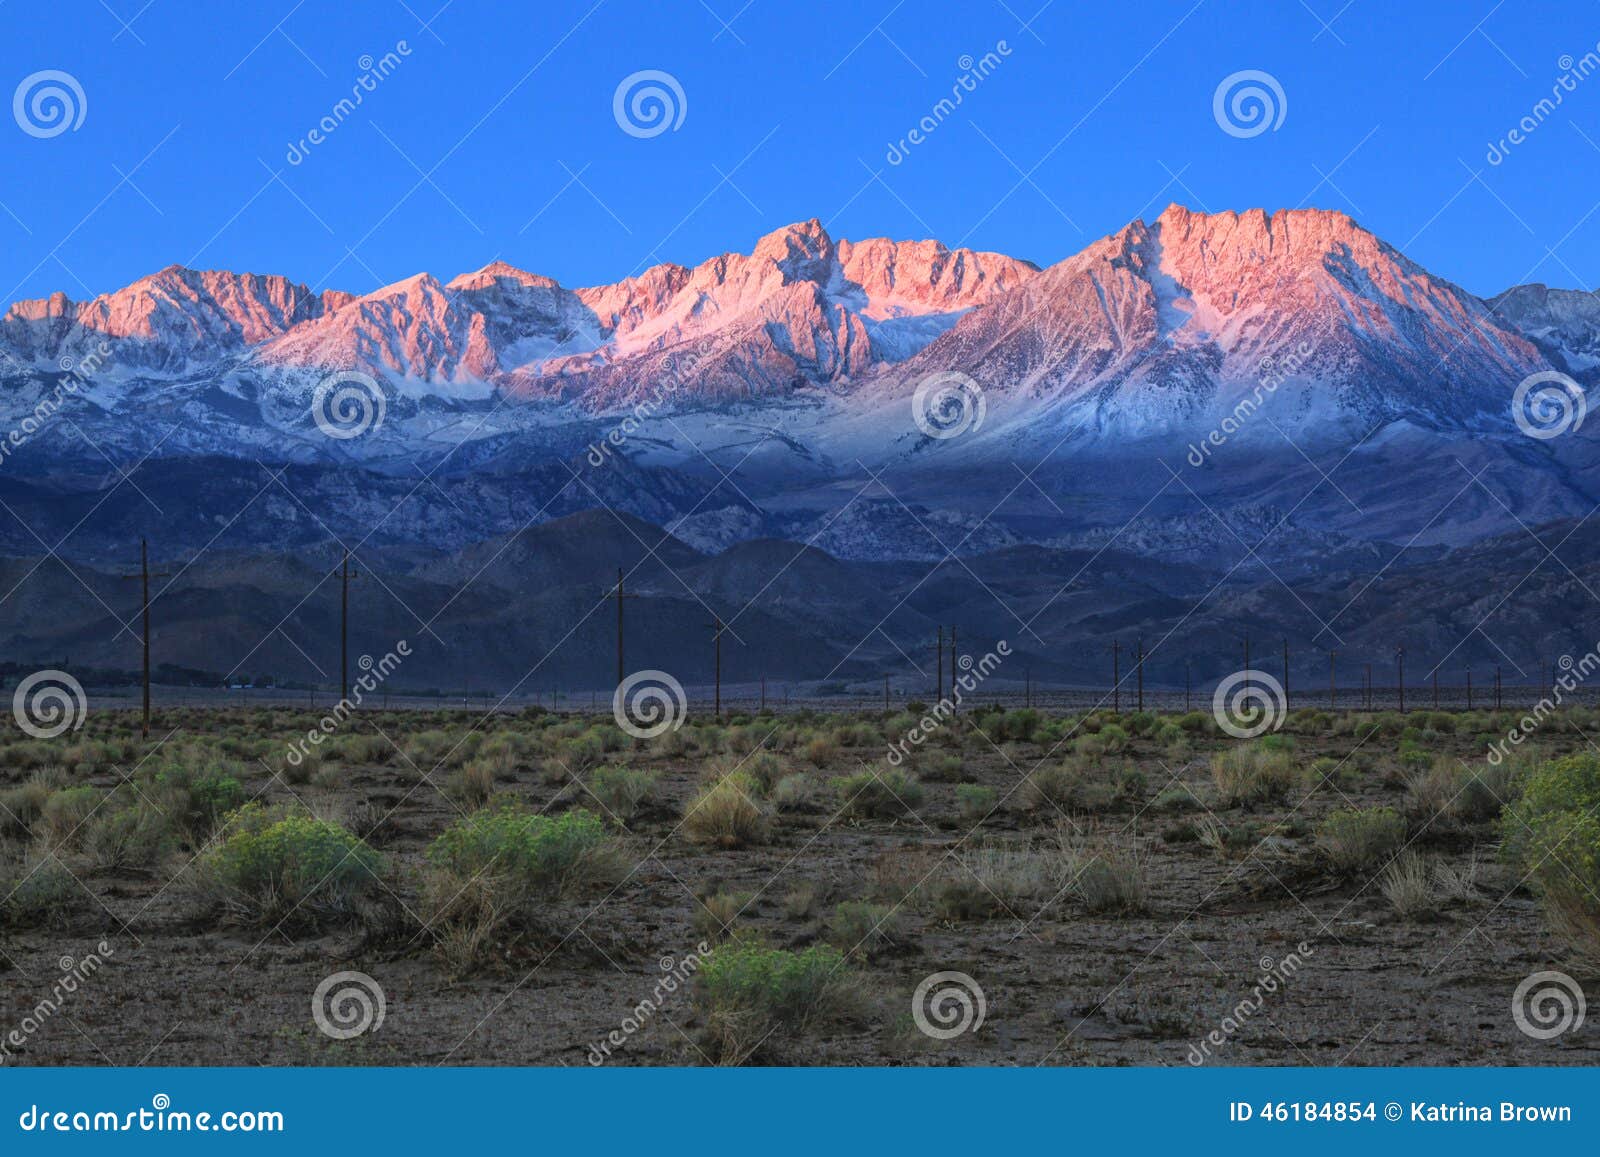 sunrise in the sierra mountains californa